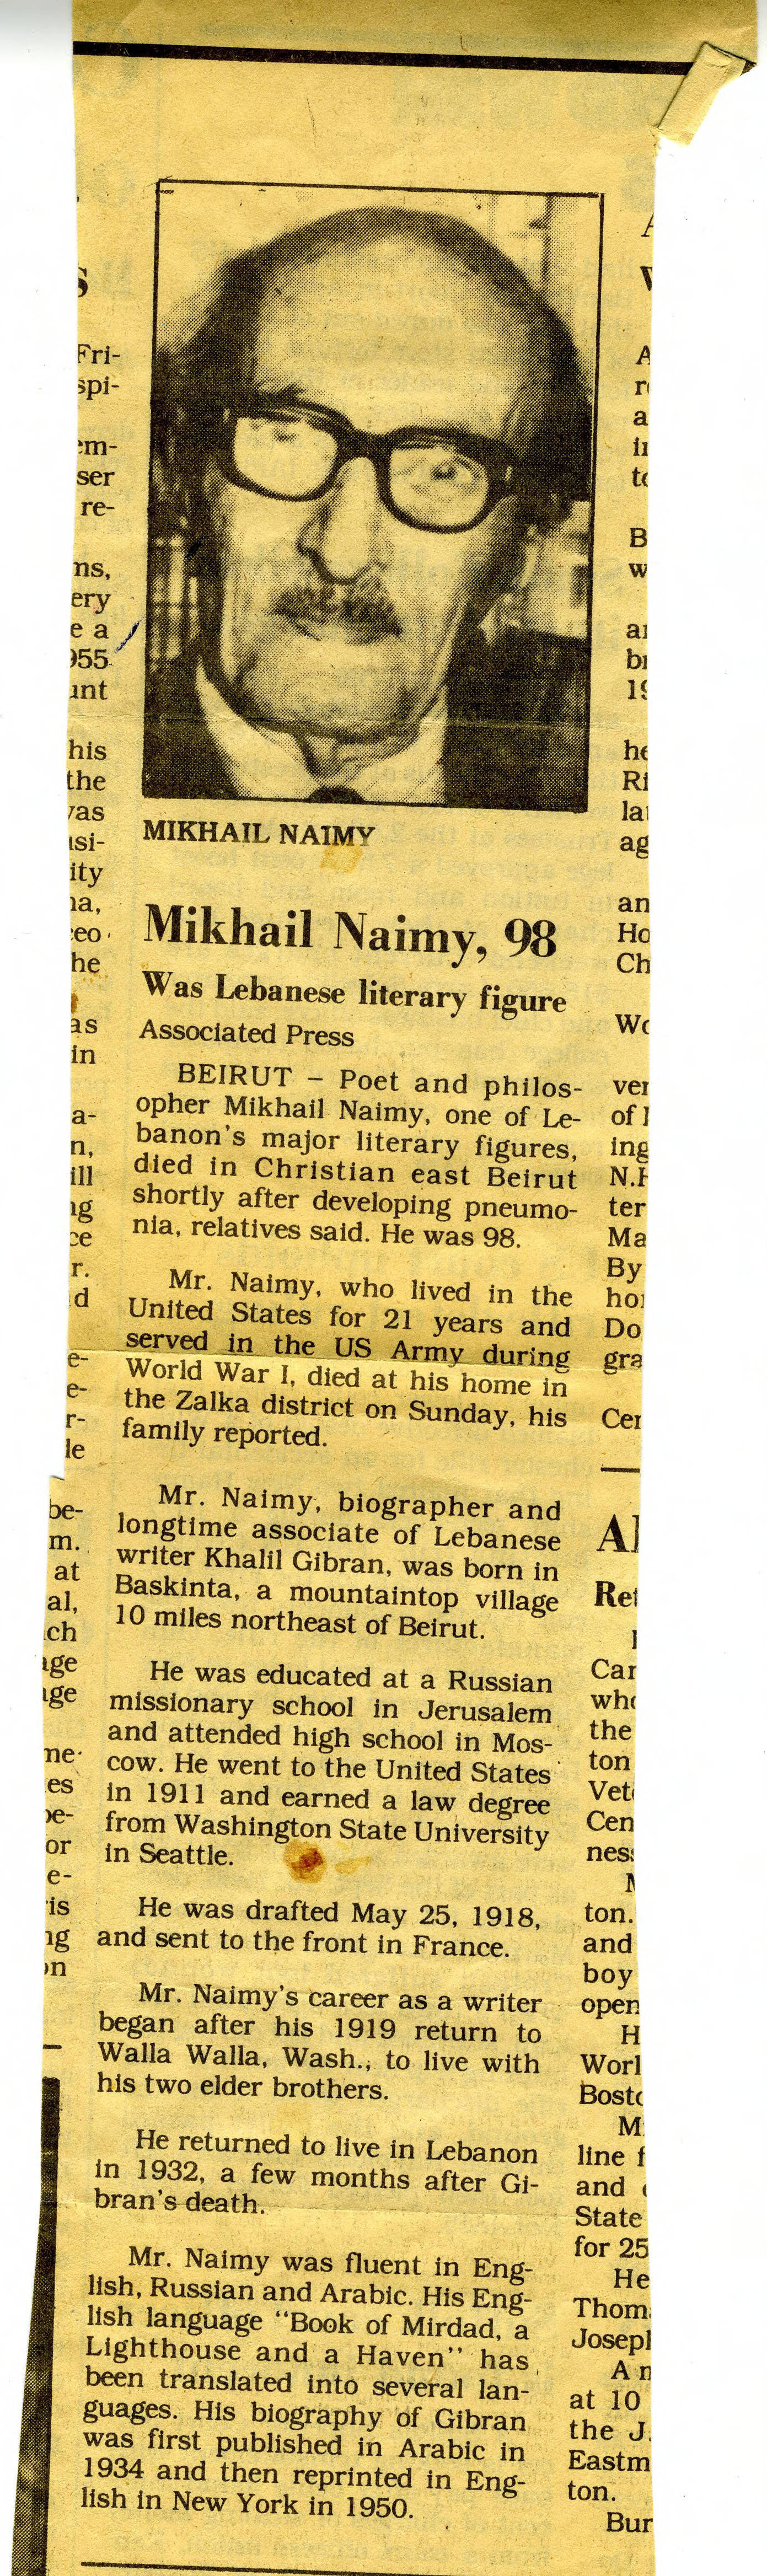 Associated Press, Obituary - Mikhail Naimy, Unknown Newspaper, February 1988.